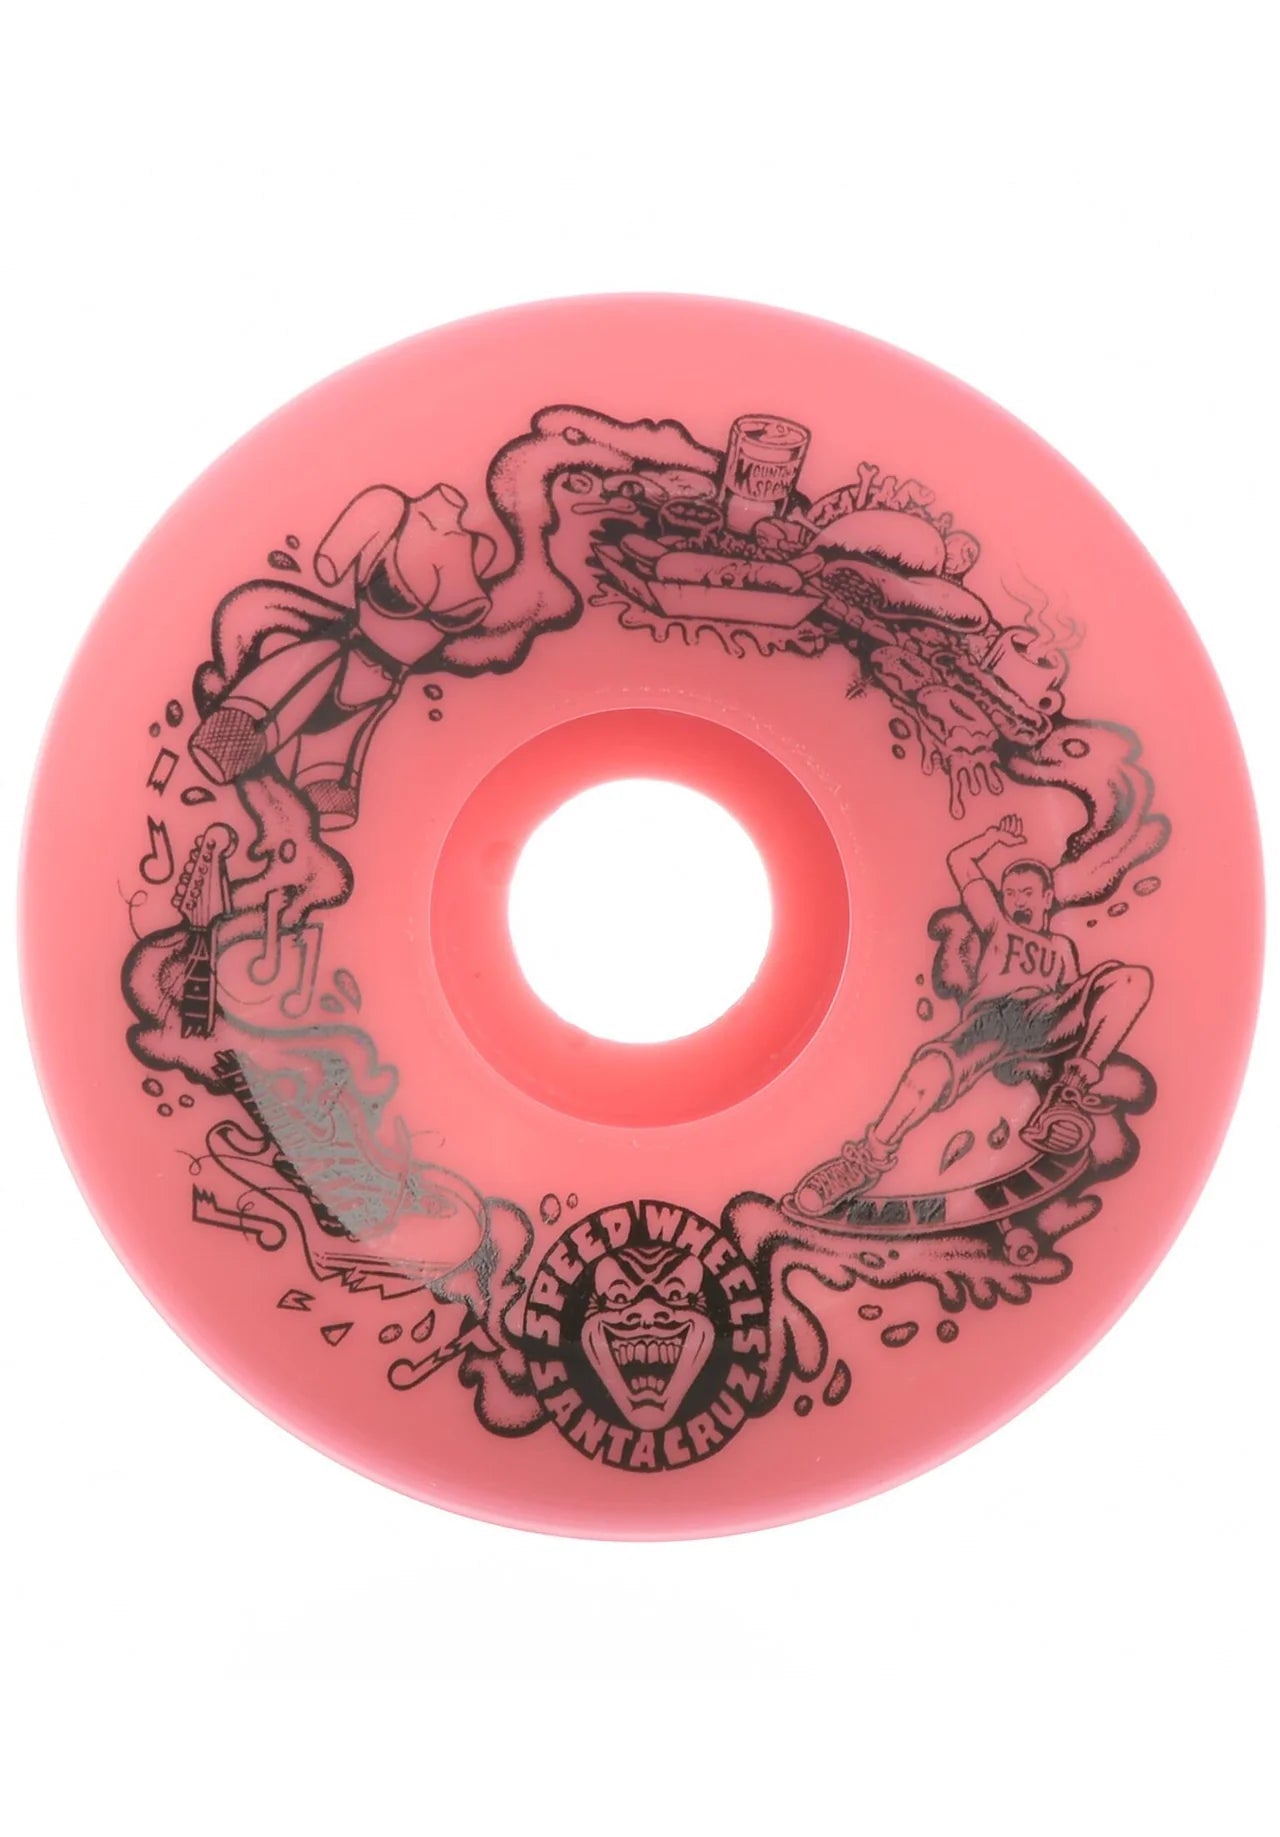 Slime Balls 65mm Big Balls Pink 92a Wheels (set of 4) - FA SKATES